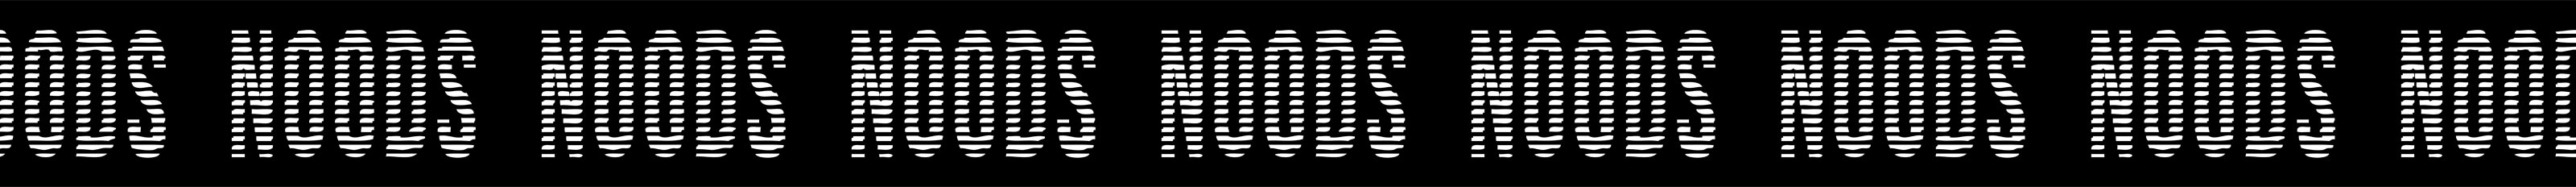 Noods Radio Logo